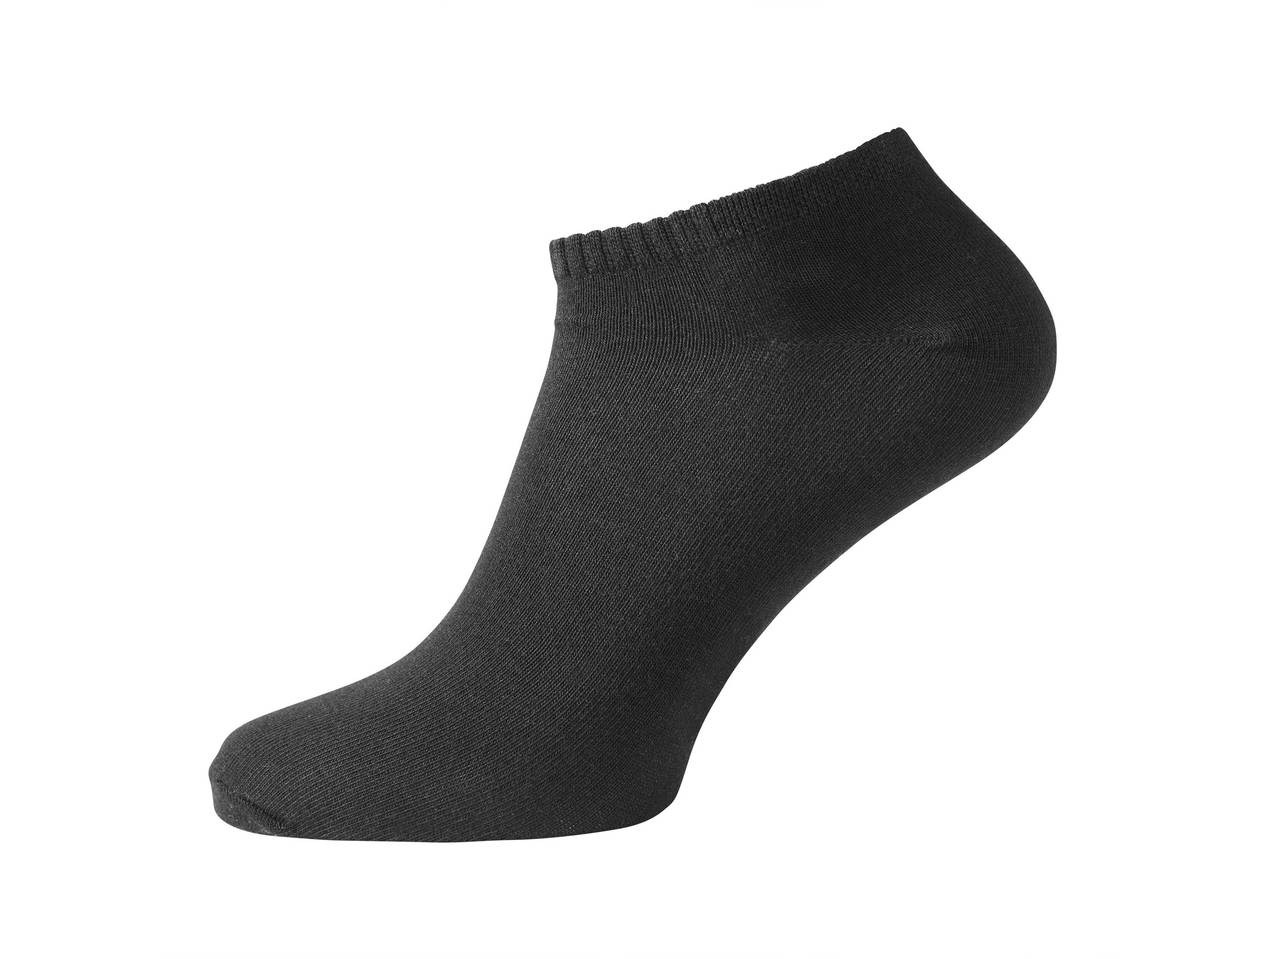 Men's Socks, 5 pairs